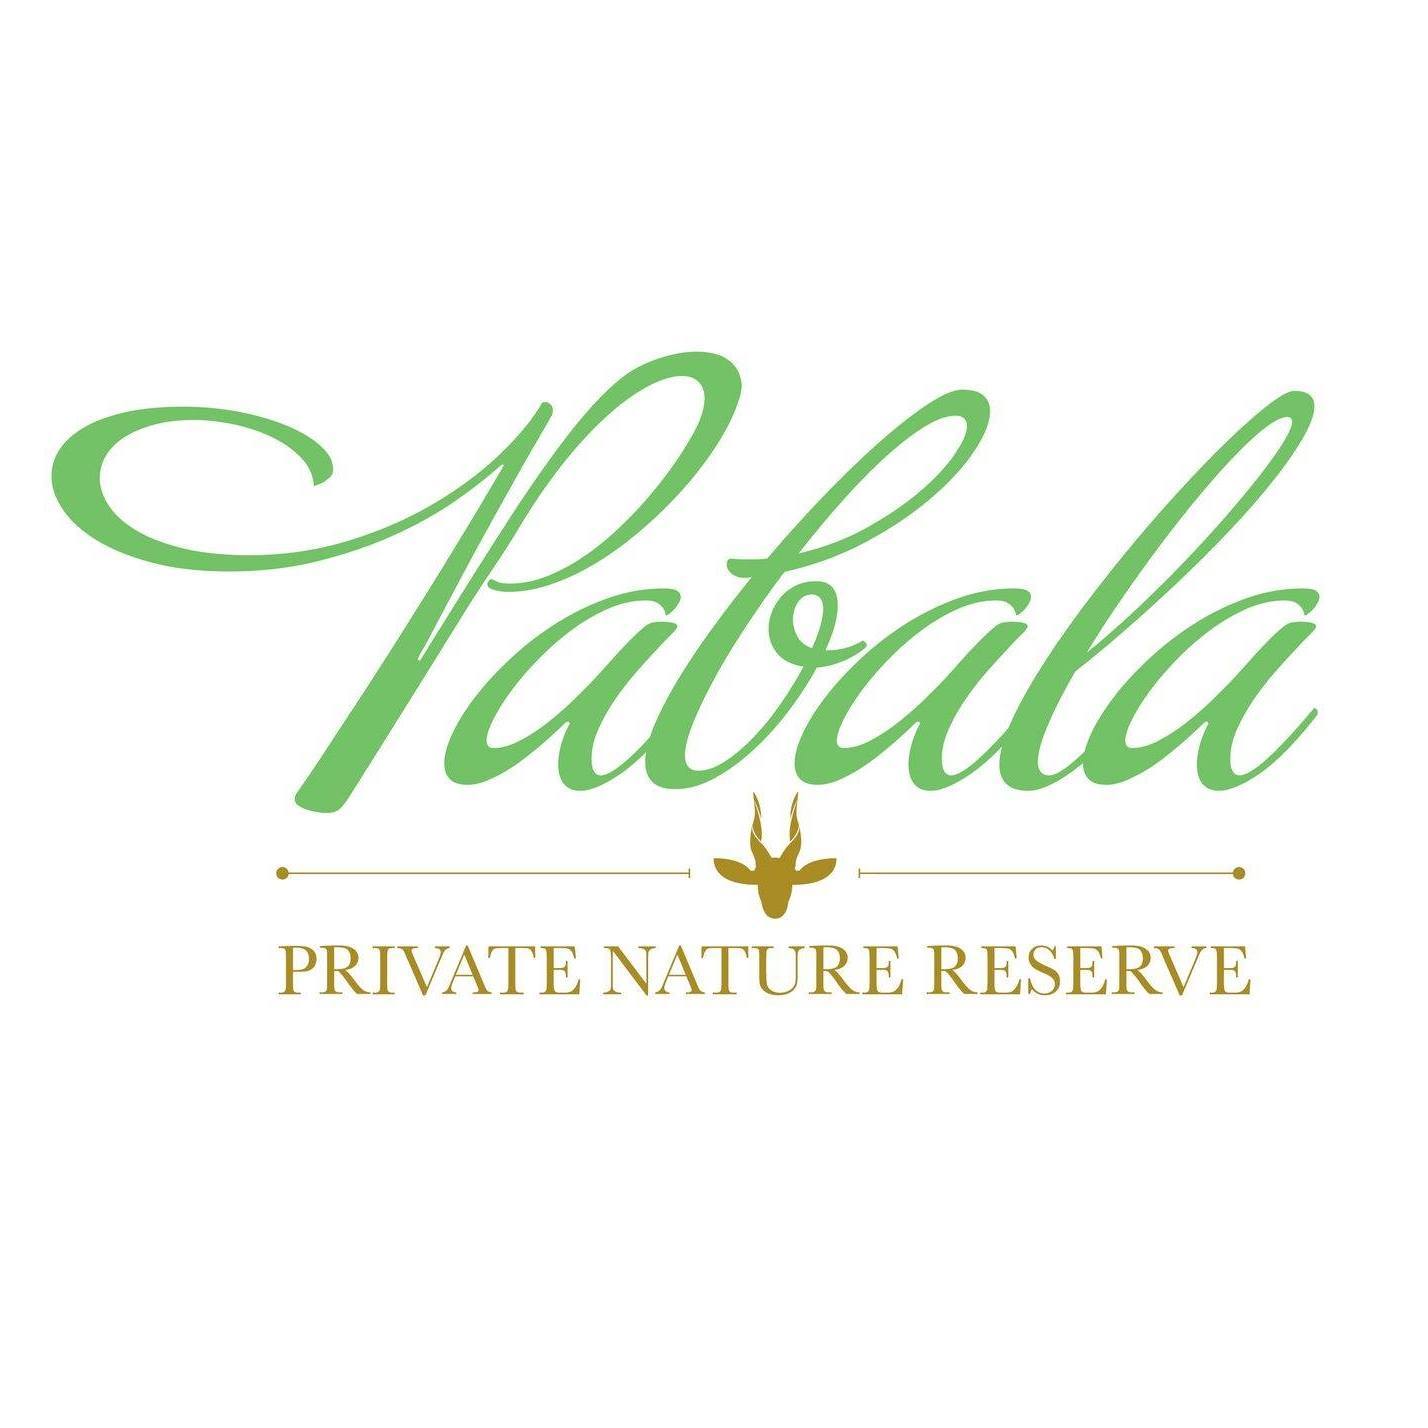 Pabala Private Nature Reserve